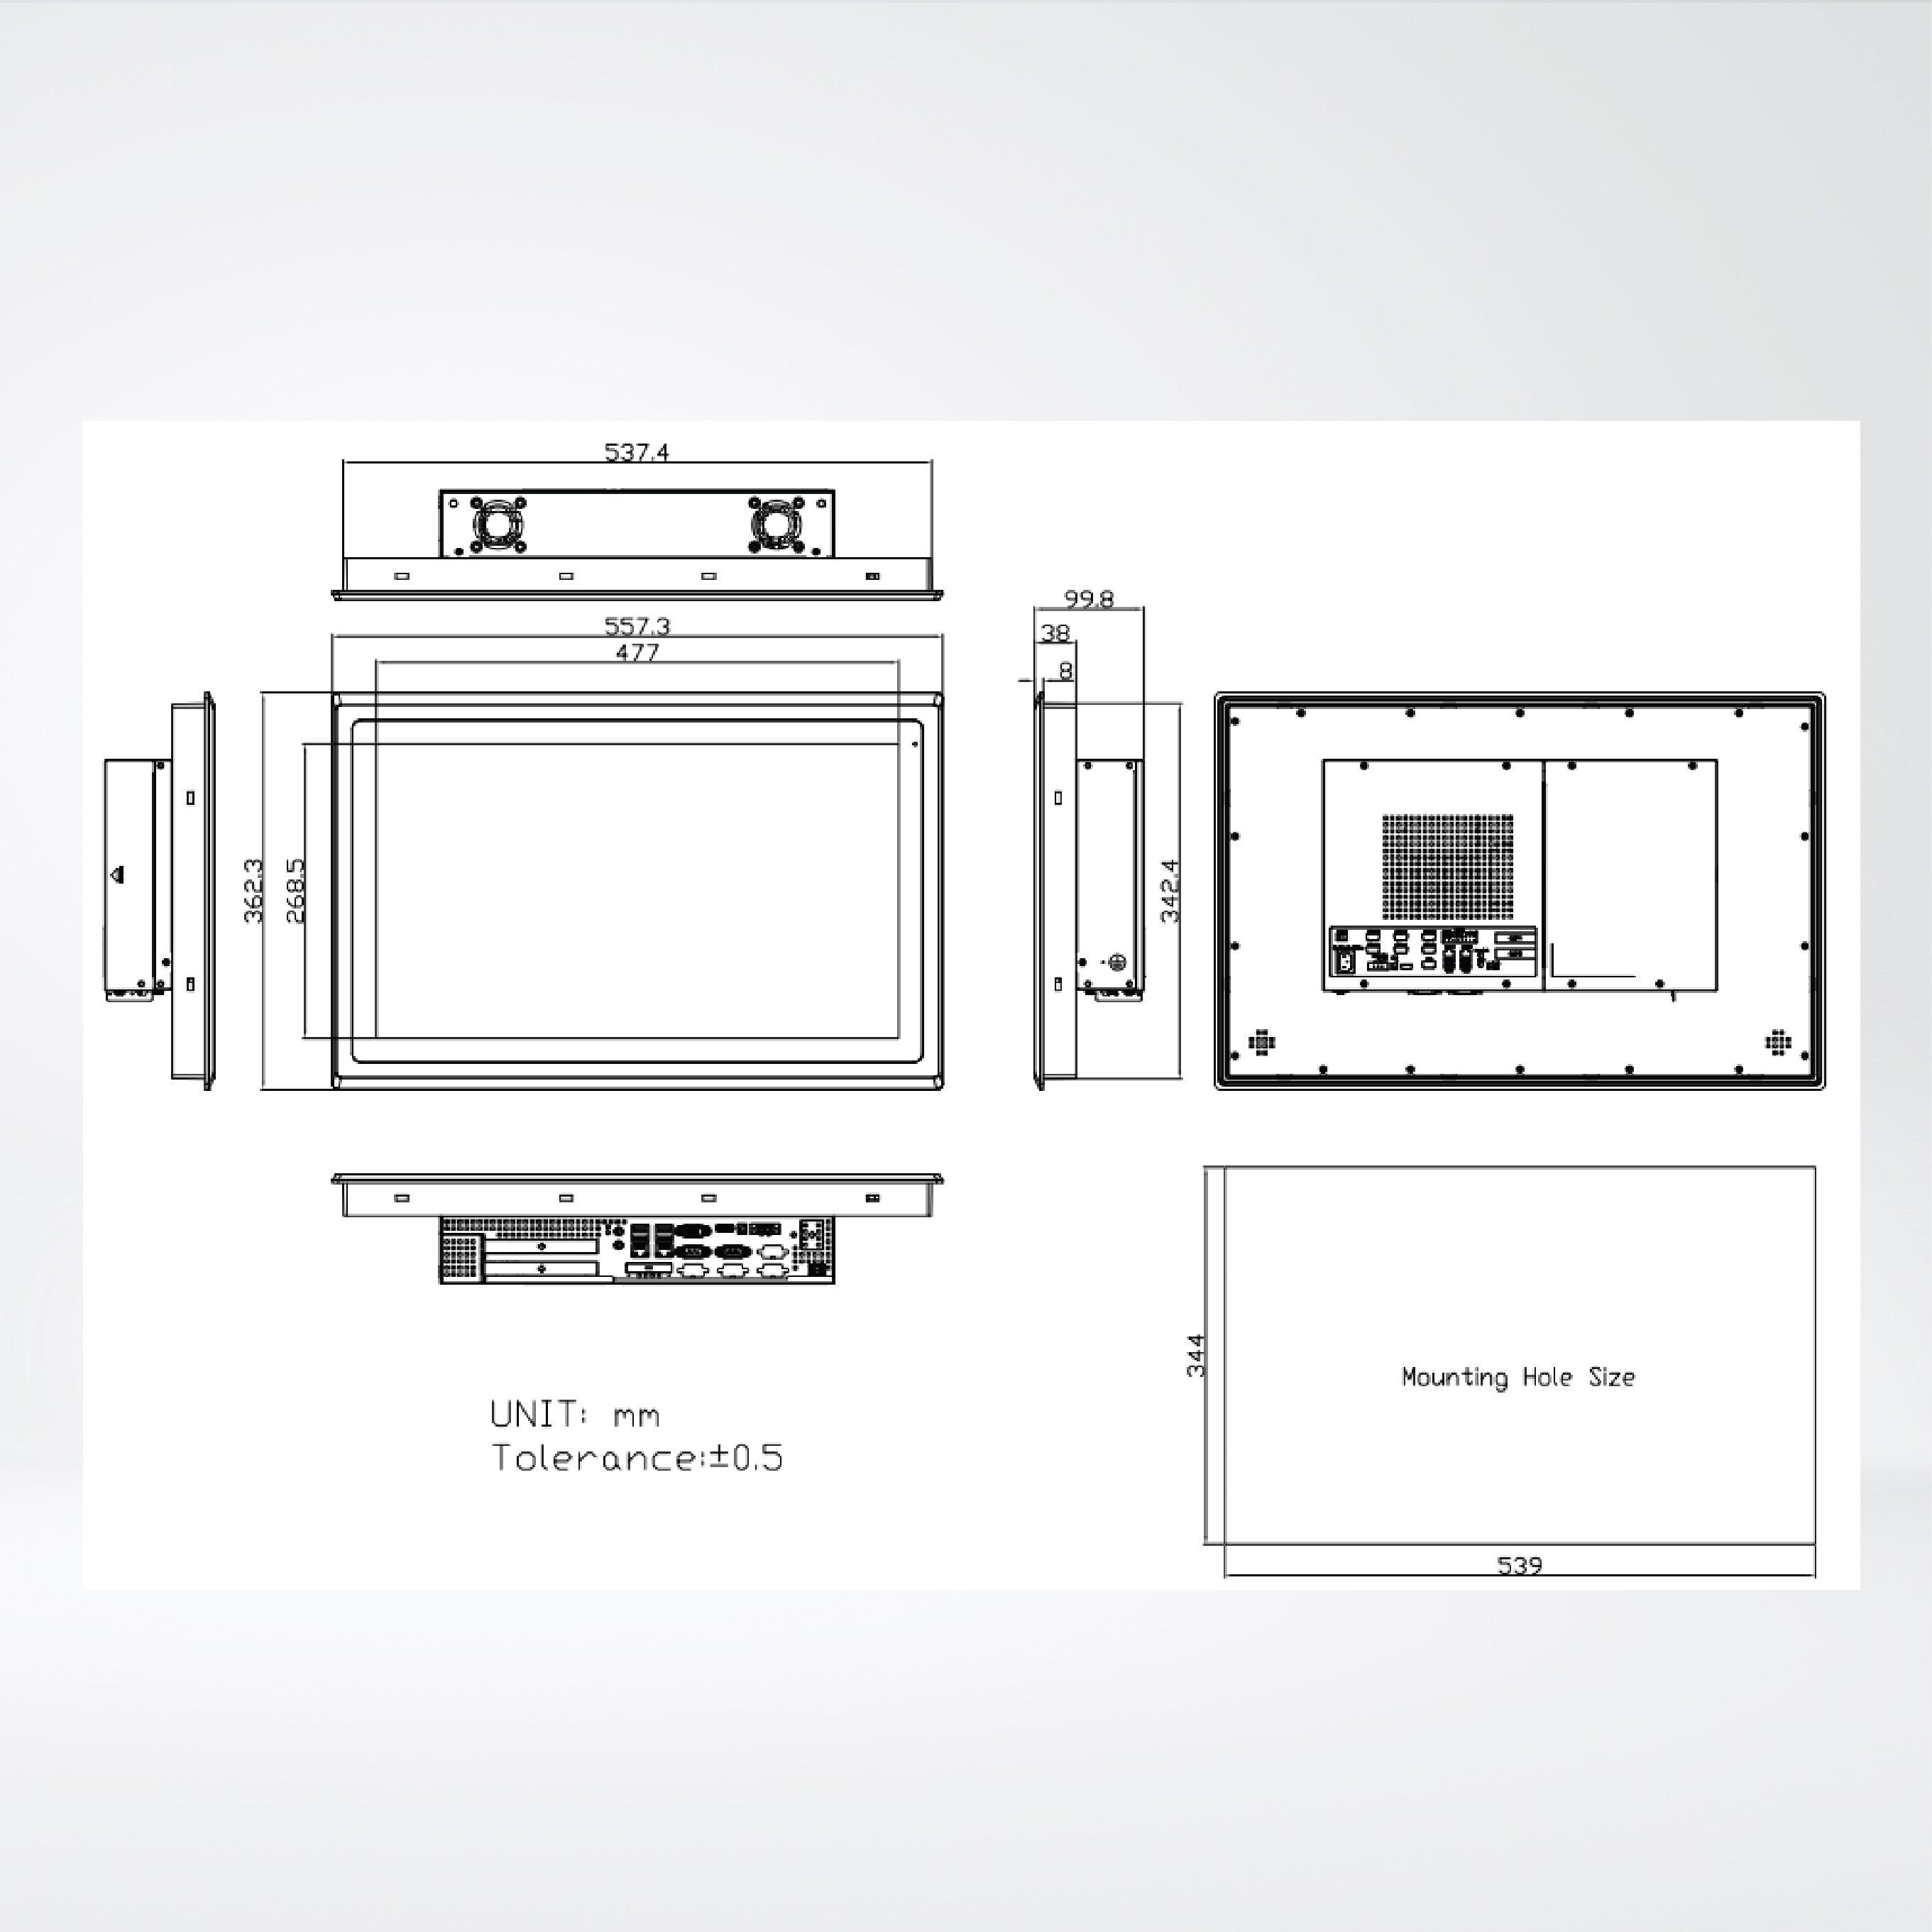 ViPAC-821G 21.5” Intel Celeron N2930 Fanless Expandable Panel PC - Riverplus